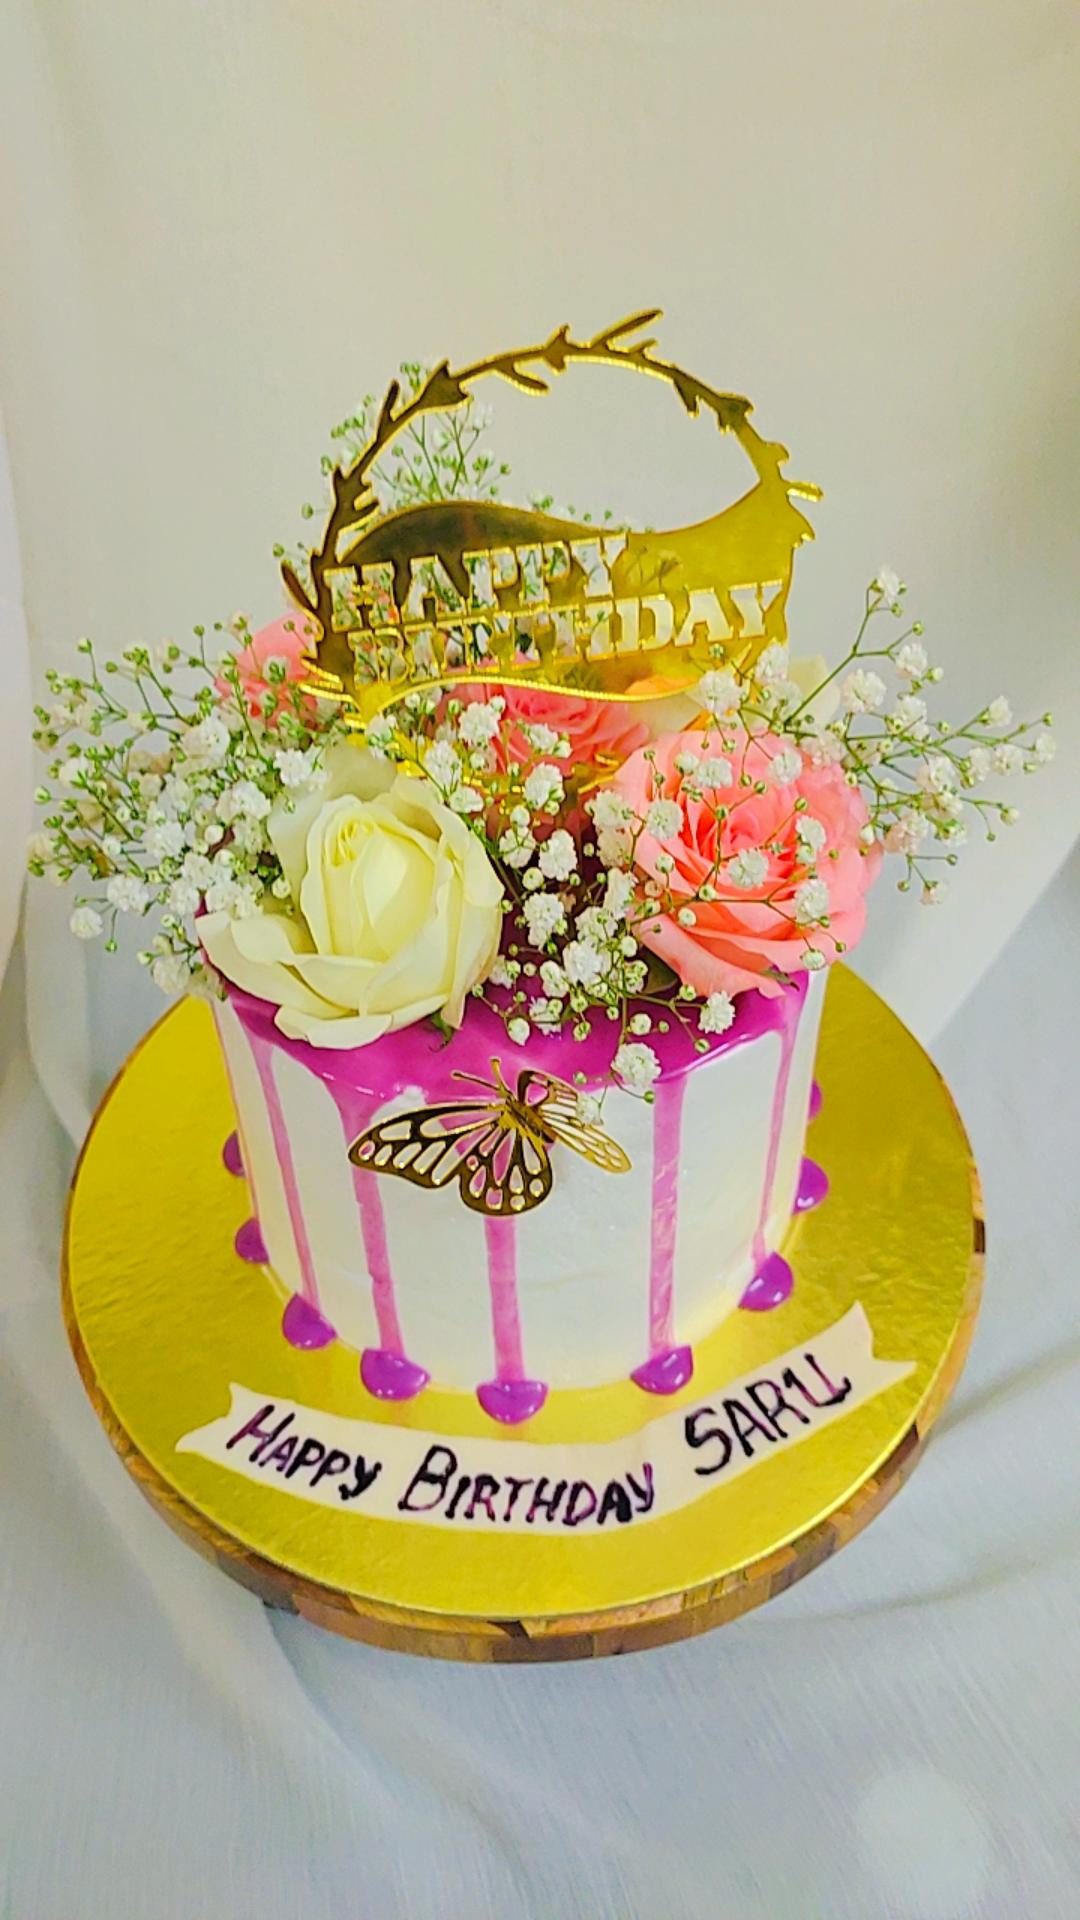 Flower Birthday Cake Designs, Images, Price Near Me